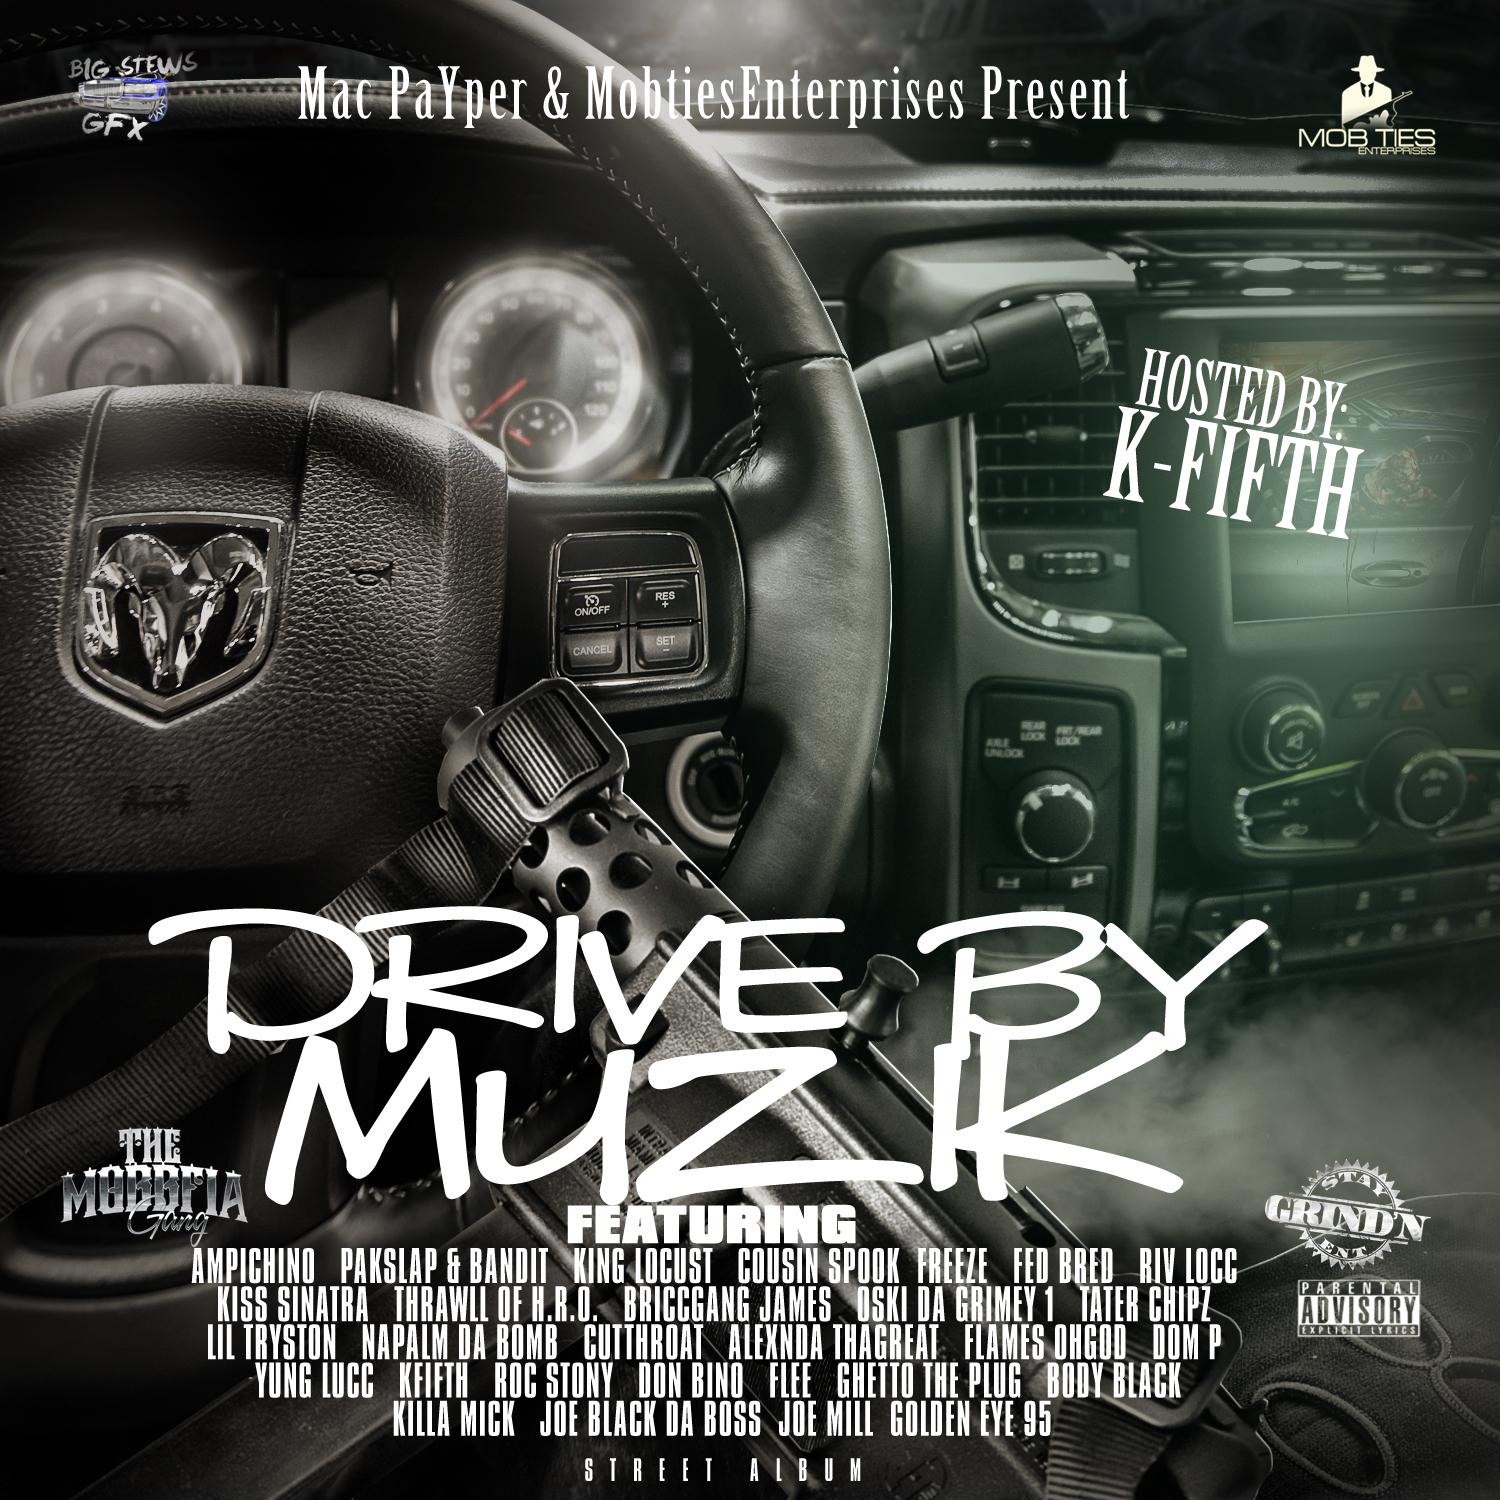 MobTies Enterprises Presents Drive By Muzik